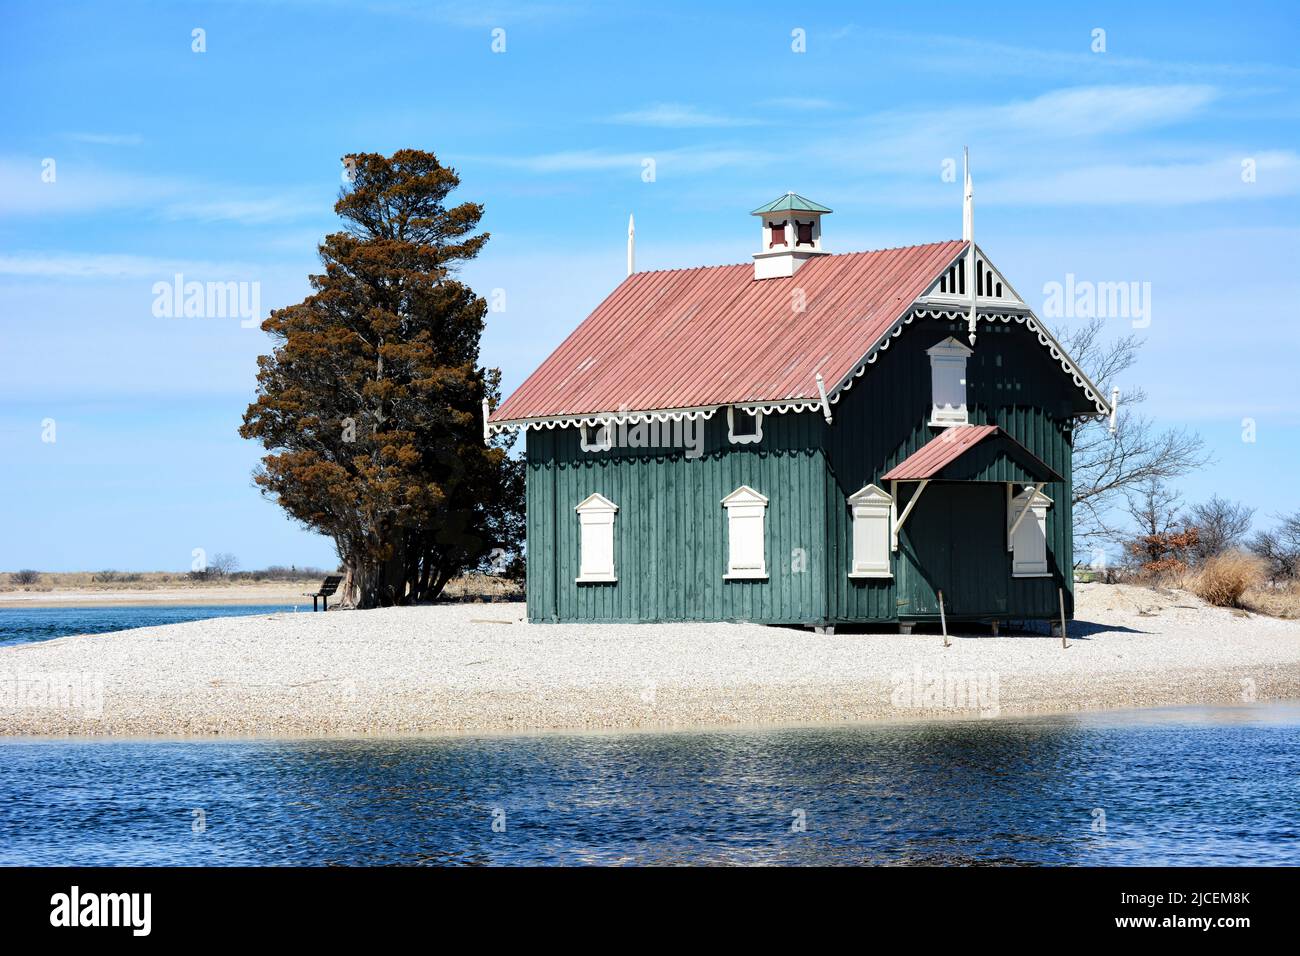 STONY BROOK, NEW YORK - 1 APR 2015: Gamecock Cottage im West Meadow Wetlands Reserve, auf Long Island. Stockfoto